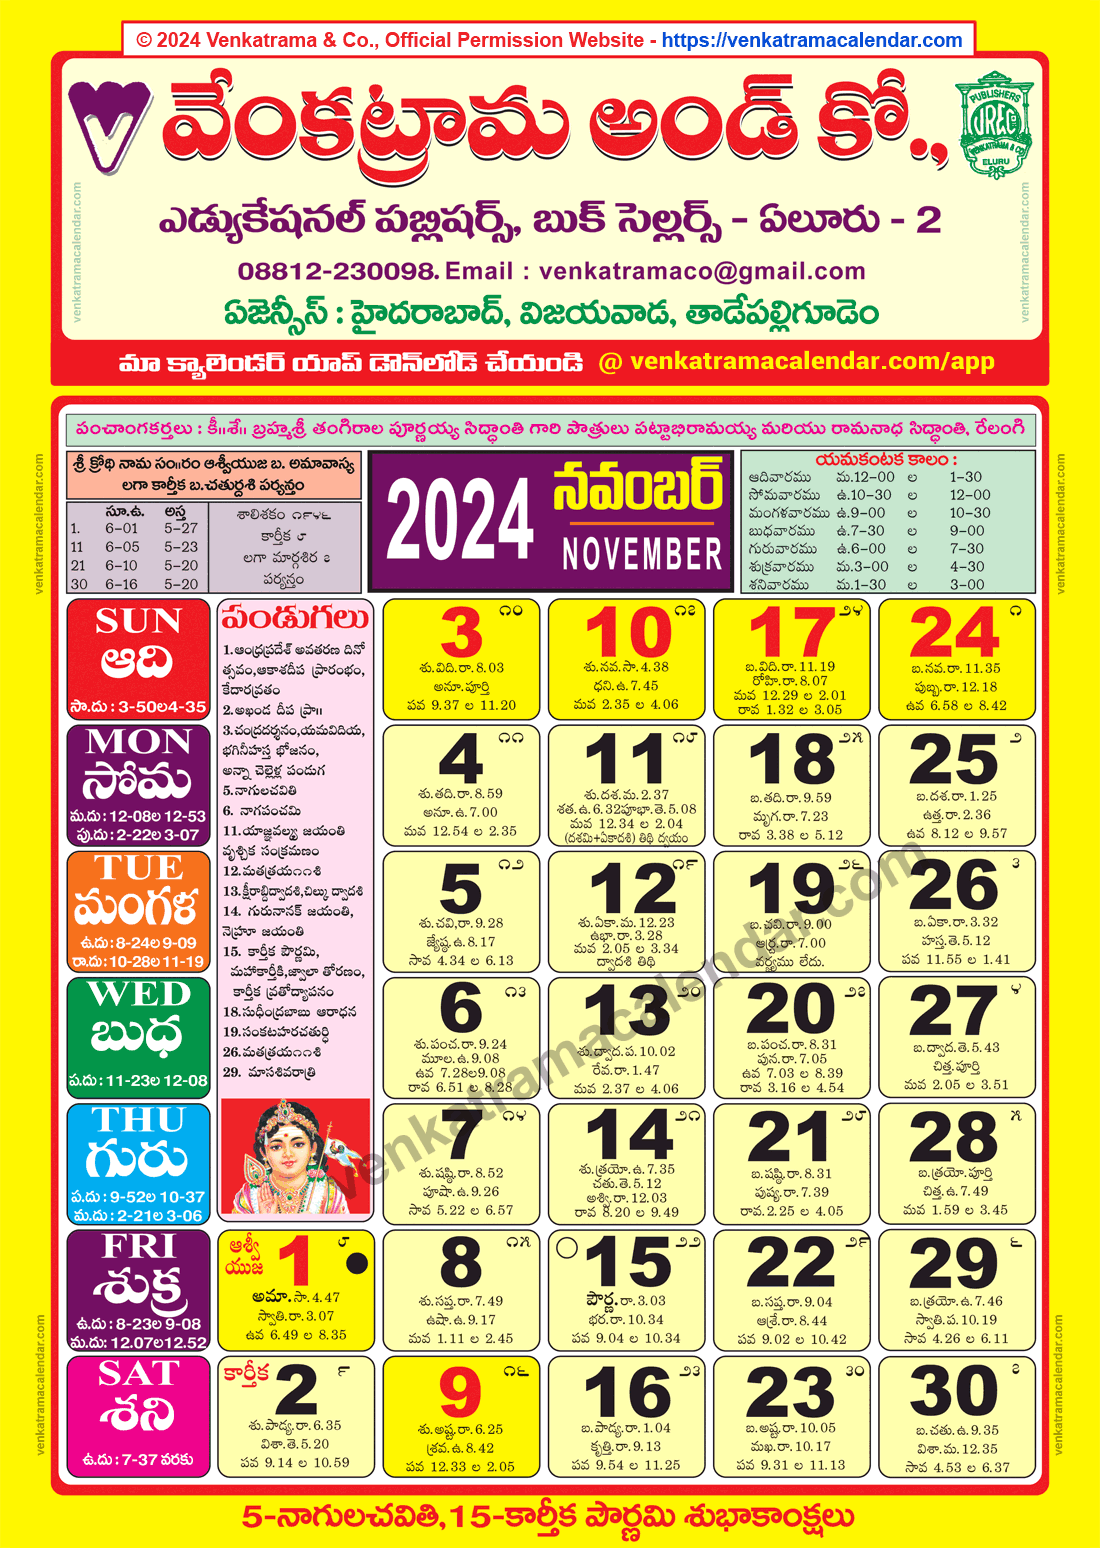 Venkatrama Calendar 2024 November Venkatrama Telugu Calendar 2024